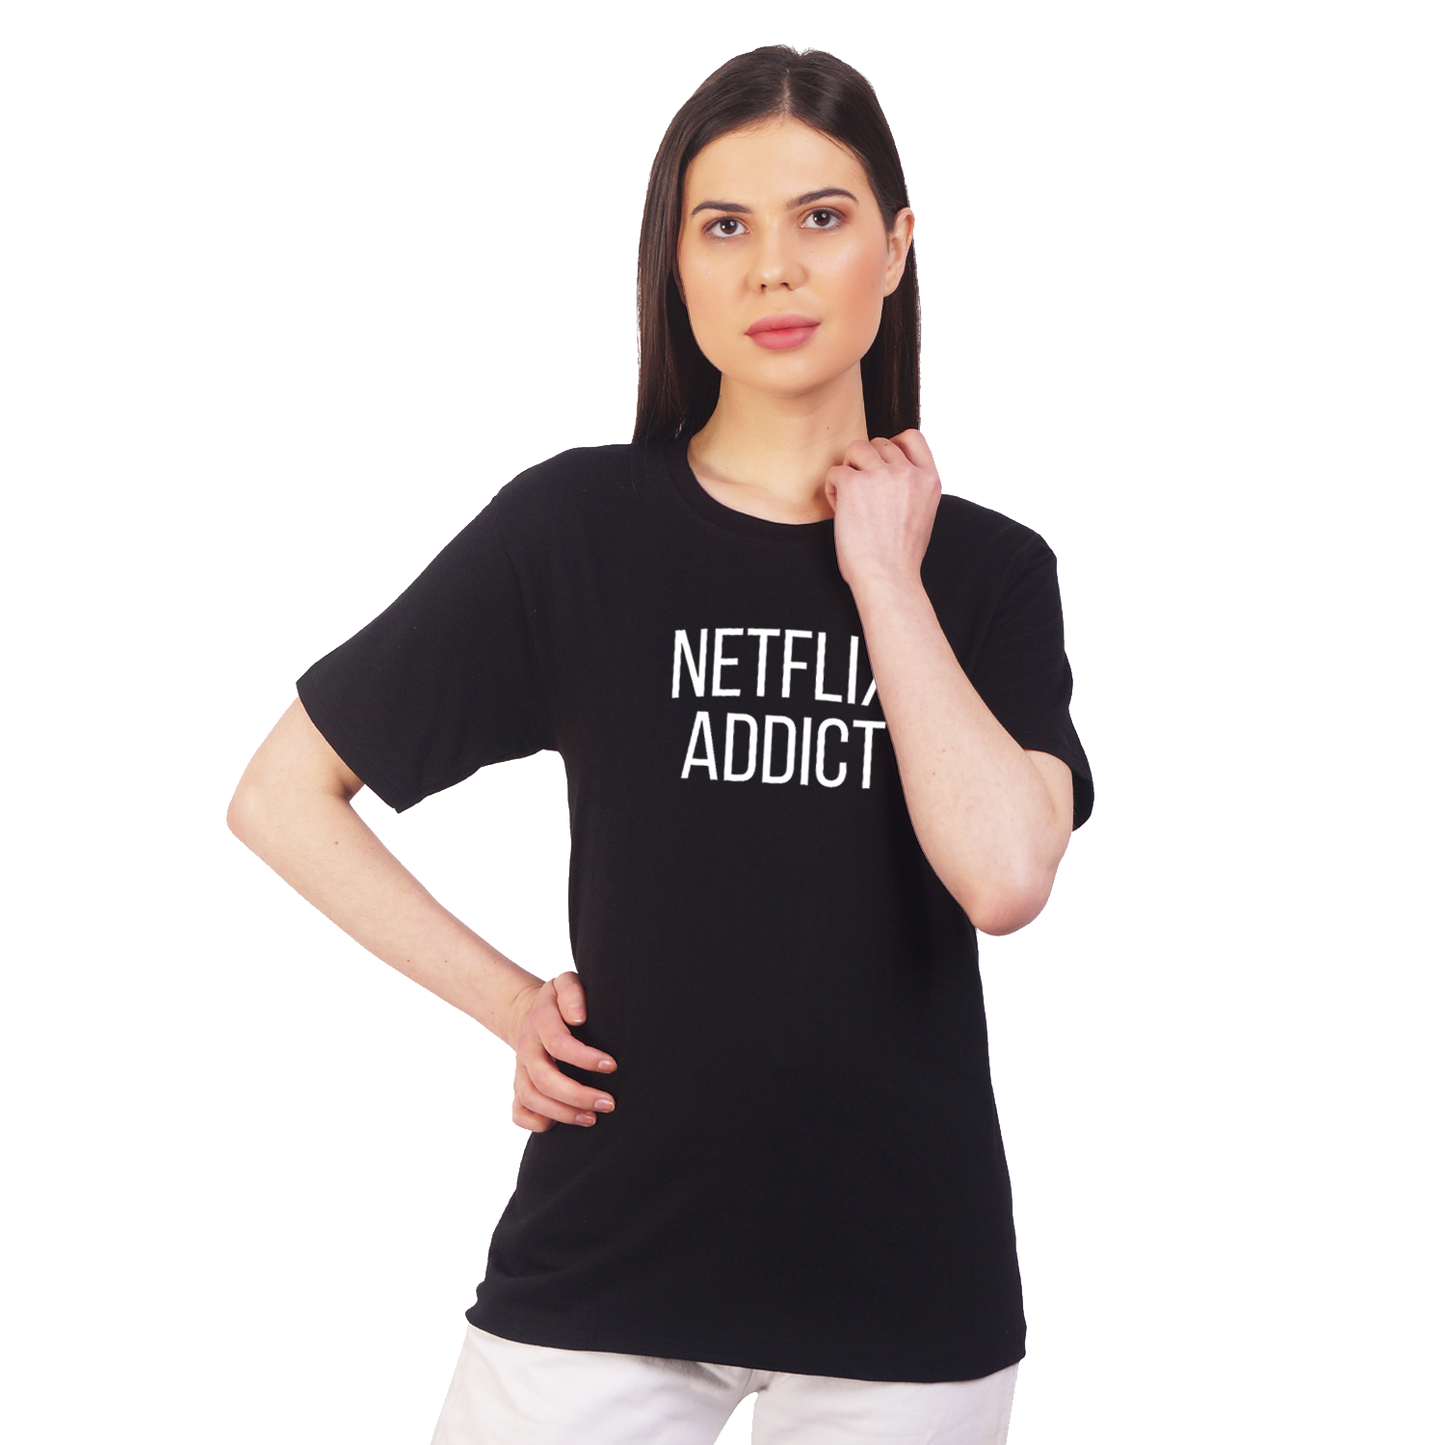 Netflix Addict Cotton T-shirt | T045